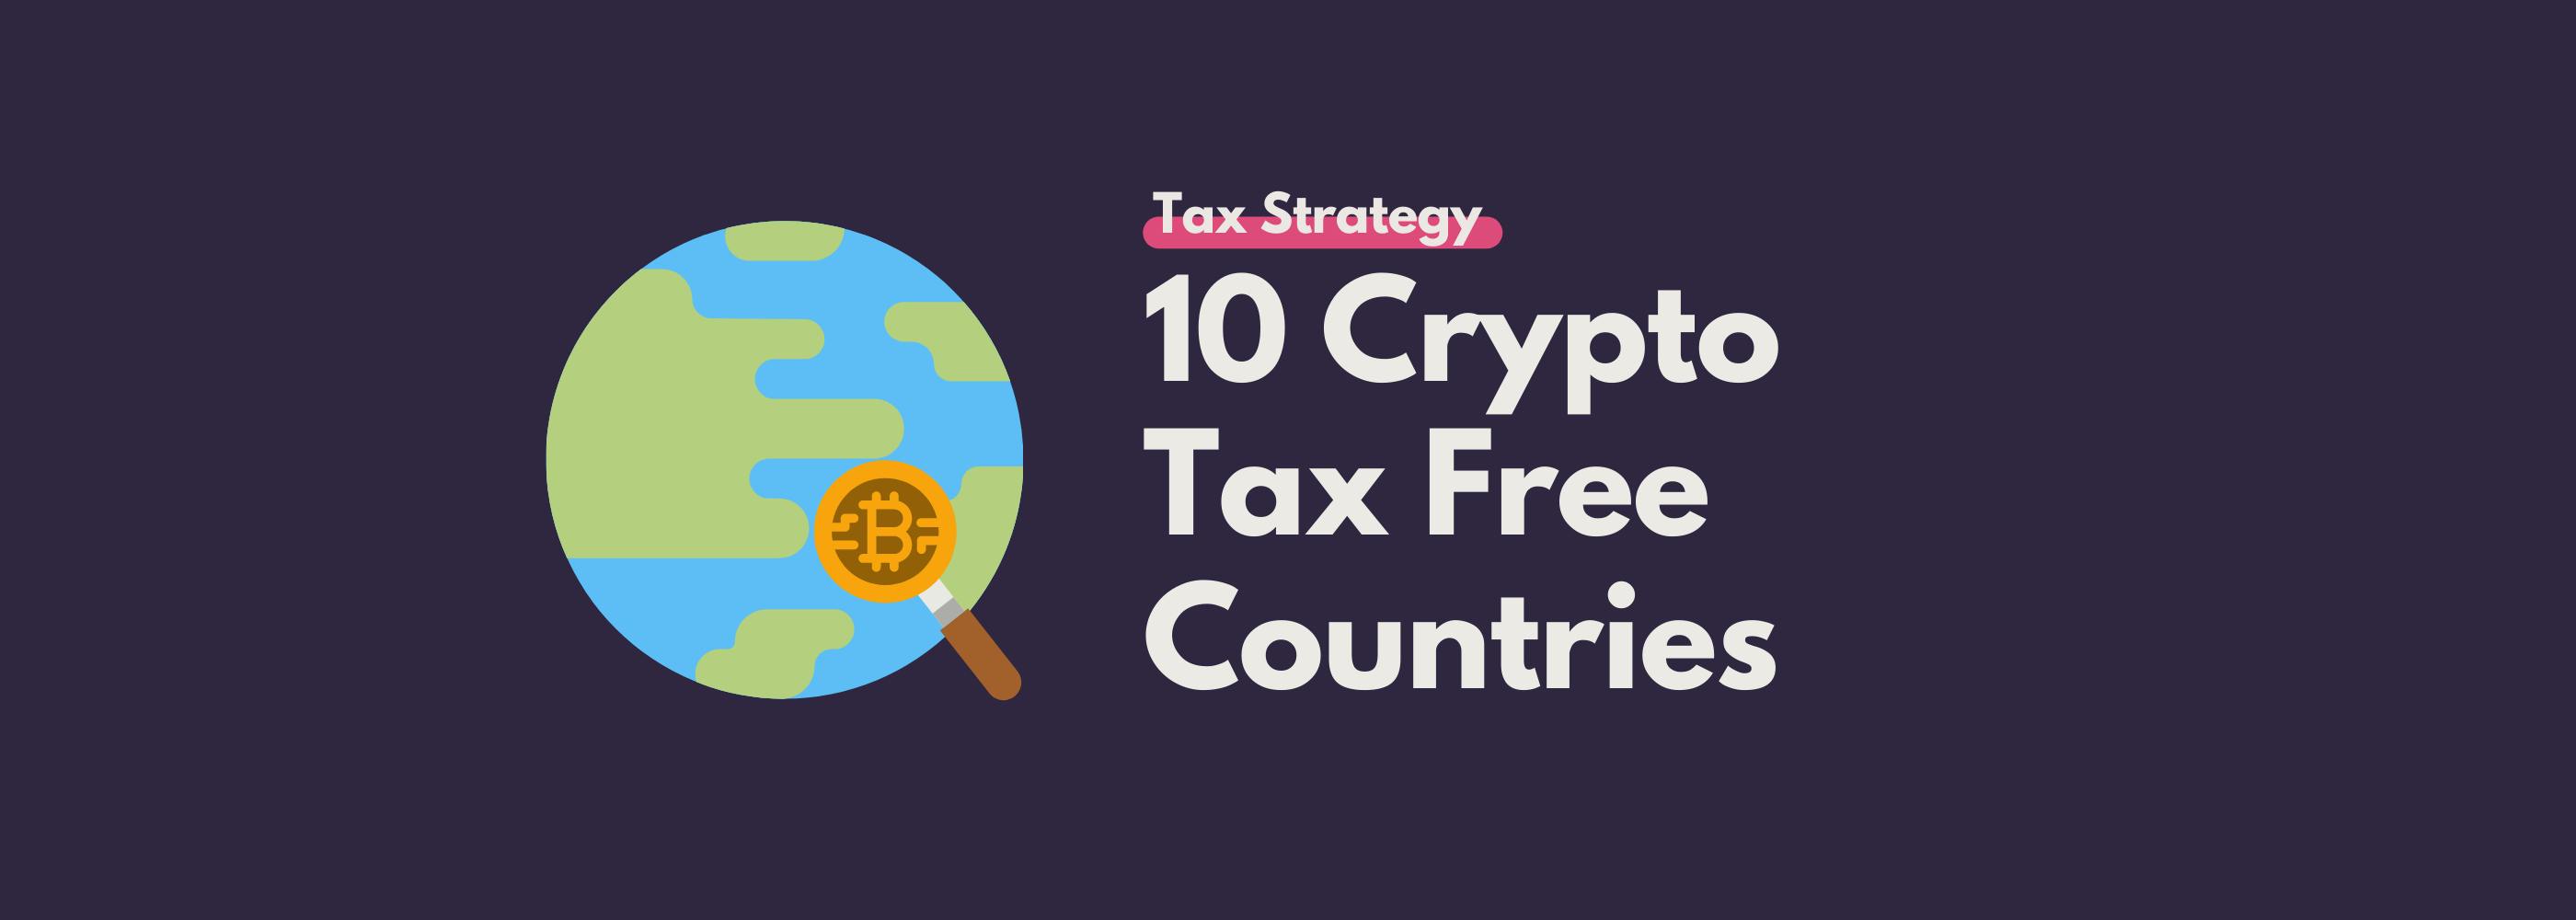 Tax free crypto countries